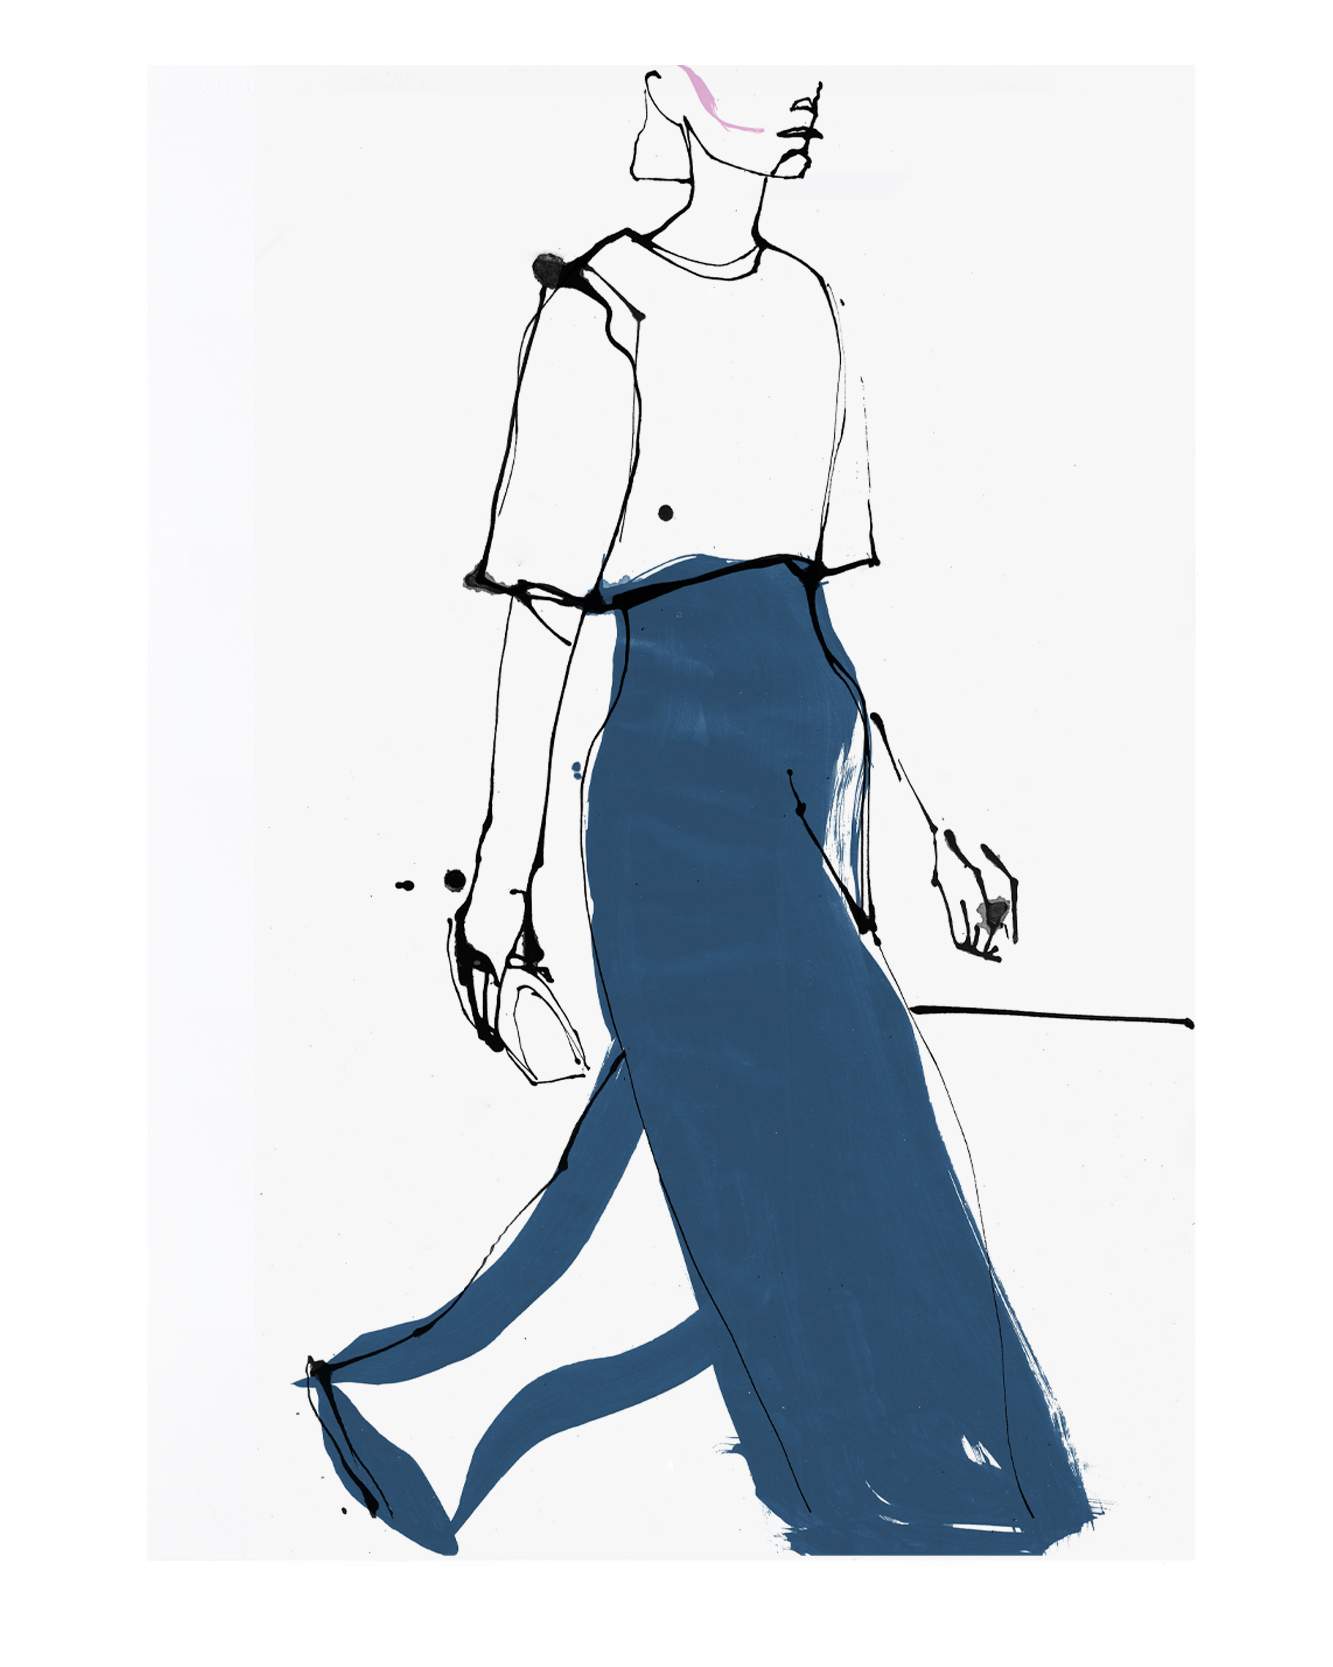 Fashion illustration hand drawn in ink. Woman drawing. Woman walking catwalk fashion illustration. Fashion drawing woman on a catwalk